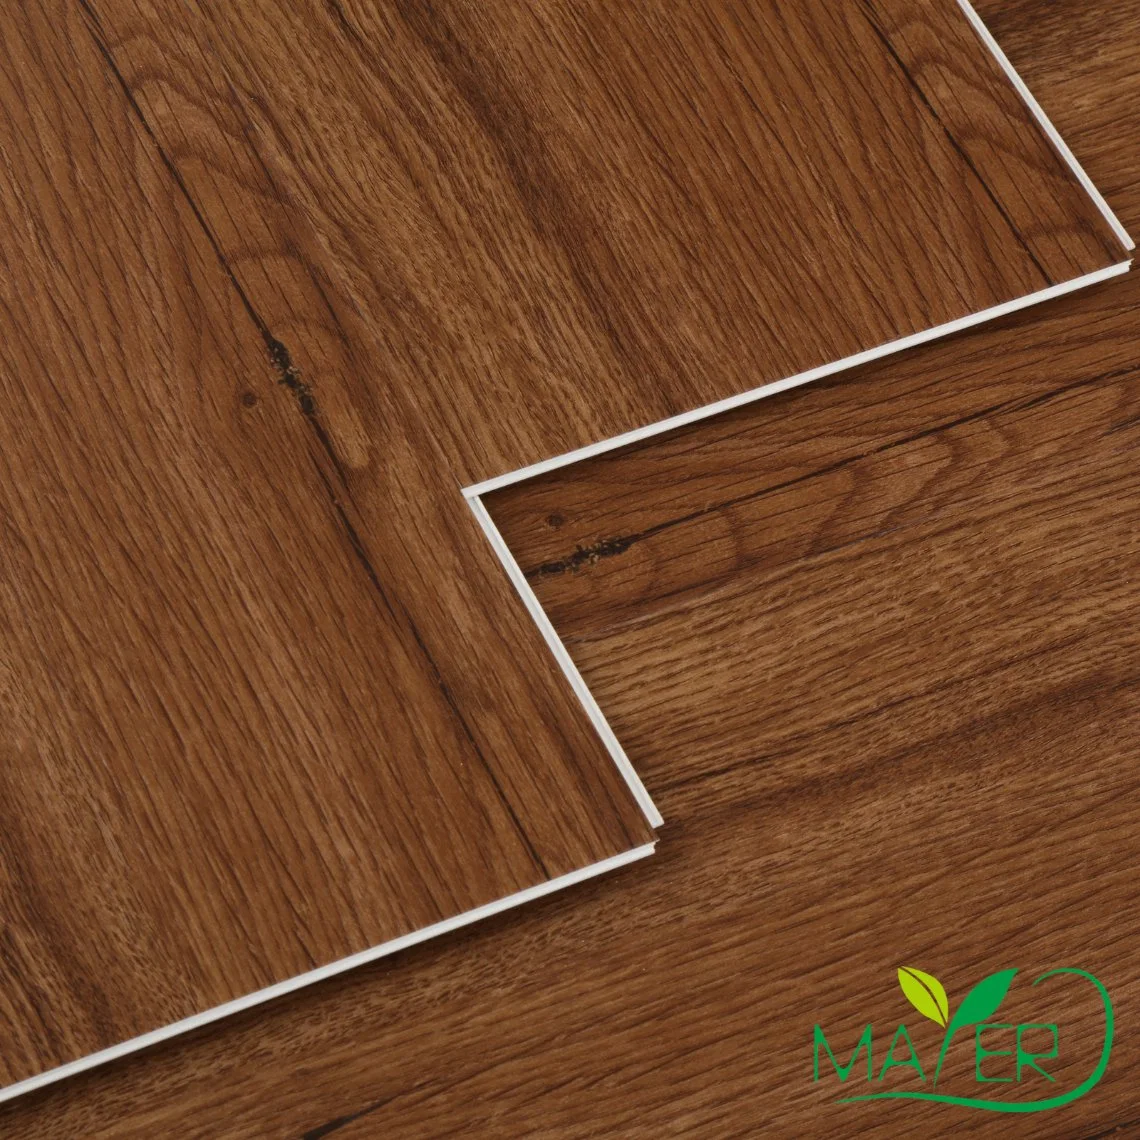 Natural Wood Grain Virgin Floor Spc Vinyl Flooring Plastic PVC Floor